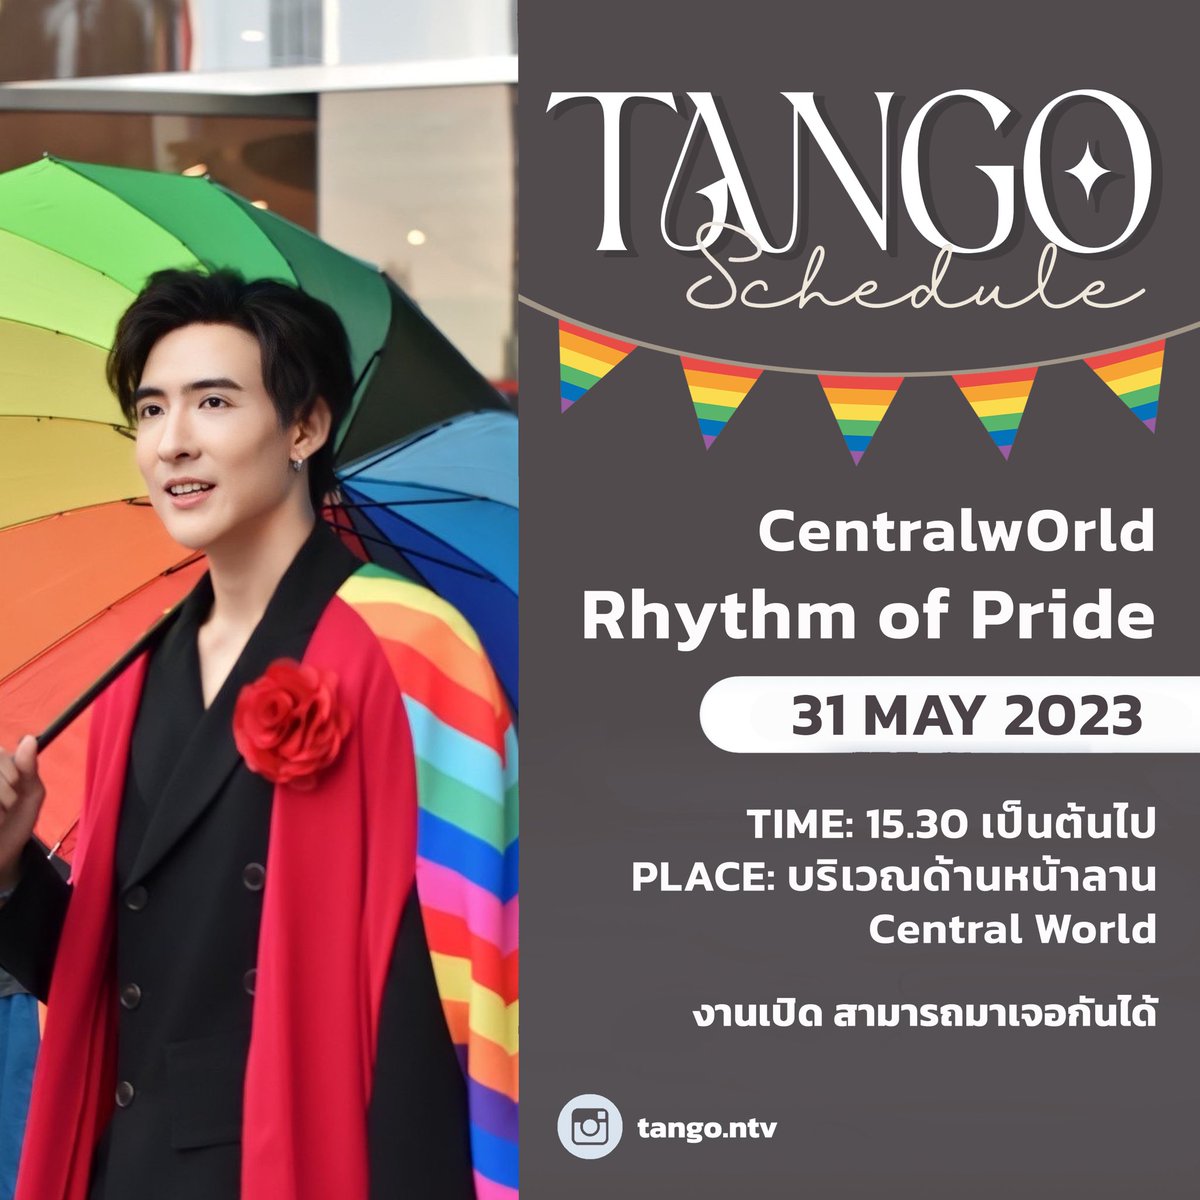 TANG-O Schedule🥬🏳️‍🌈

CentralwOrld Rhythm of Pride

📅: 31 พฤษภาคม 2567
🏫: บริเวณด้านหน้าลาน Central World
🕙: 15.30 เป็นต้นไป

#TangoNatthavat